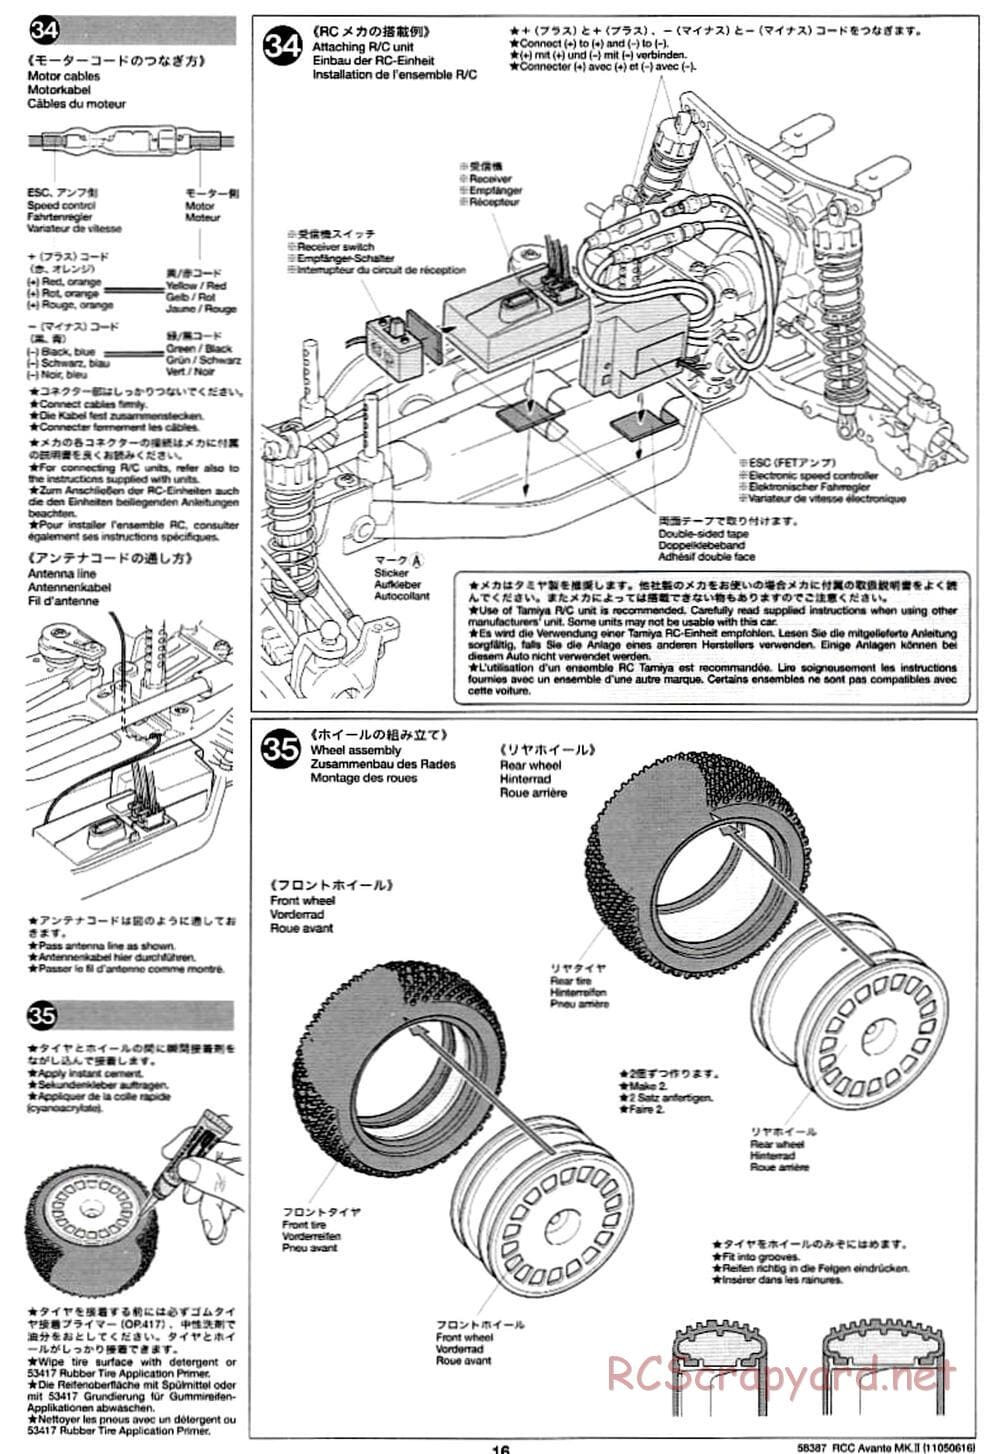 Tamiya - Avante Mk.II Chassis - Manual - Page 16